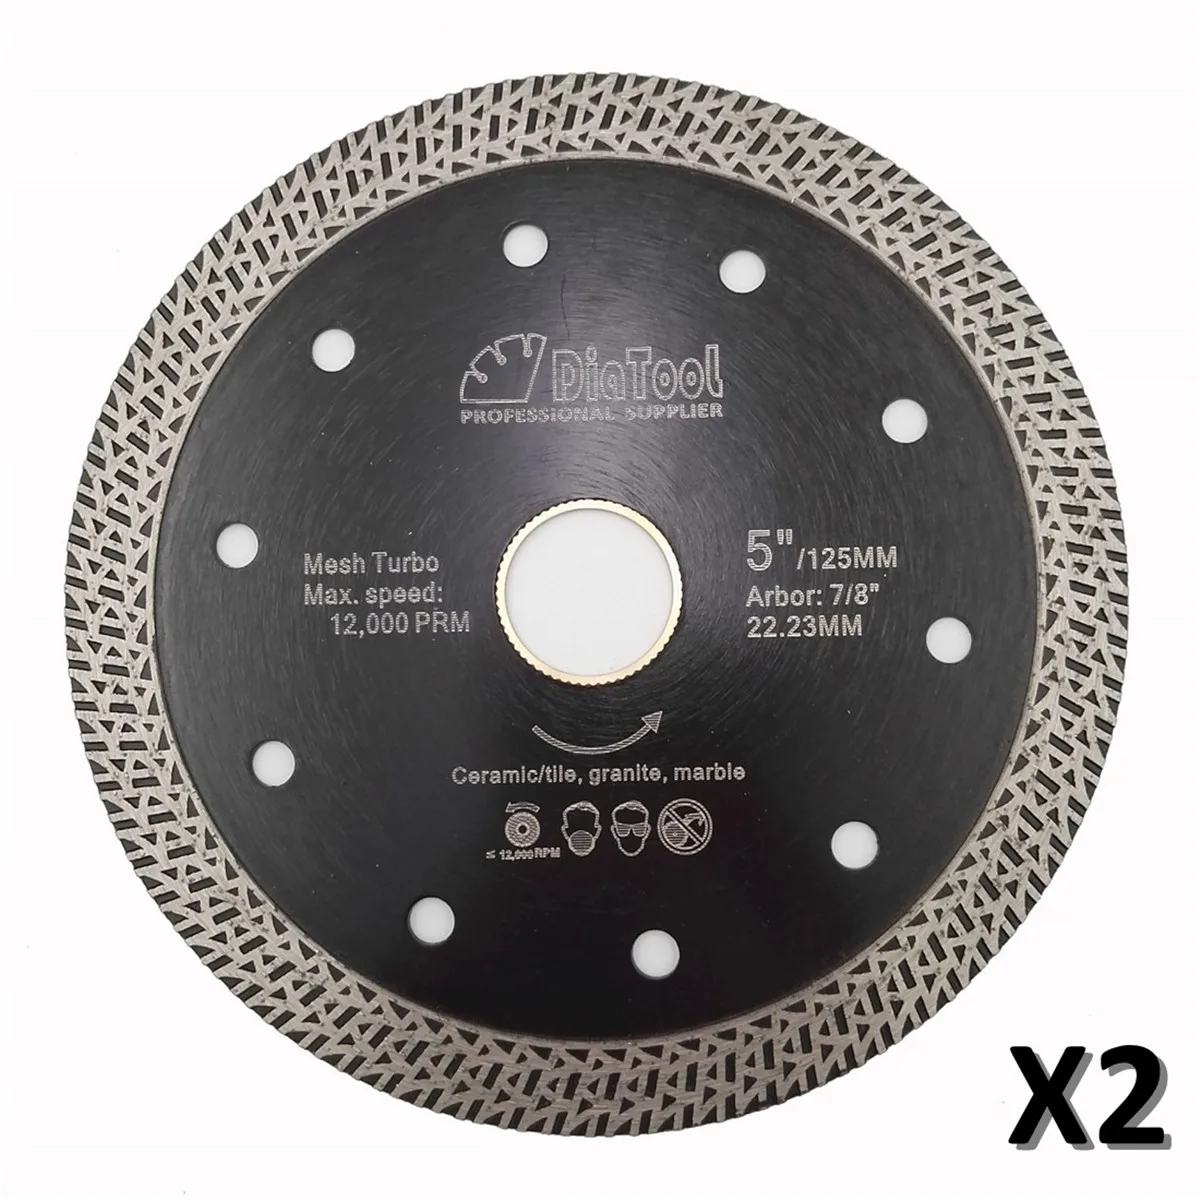 DIATOOL 2pks Diameter 5"/125mm Diamond Hot-pressed Sintered Diamond Cutting Disc With Mesh Turbo Rim Segment 5 inch Saw Blade